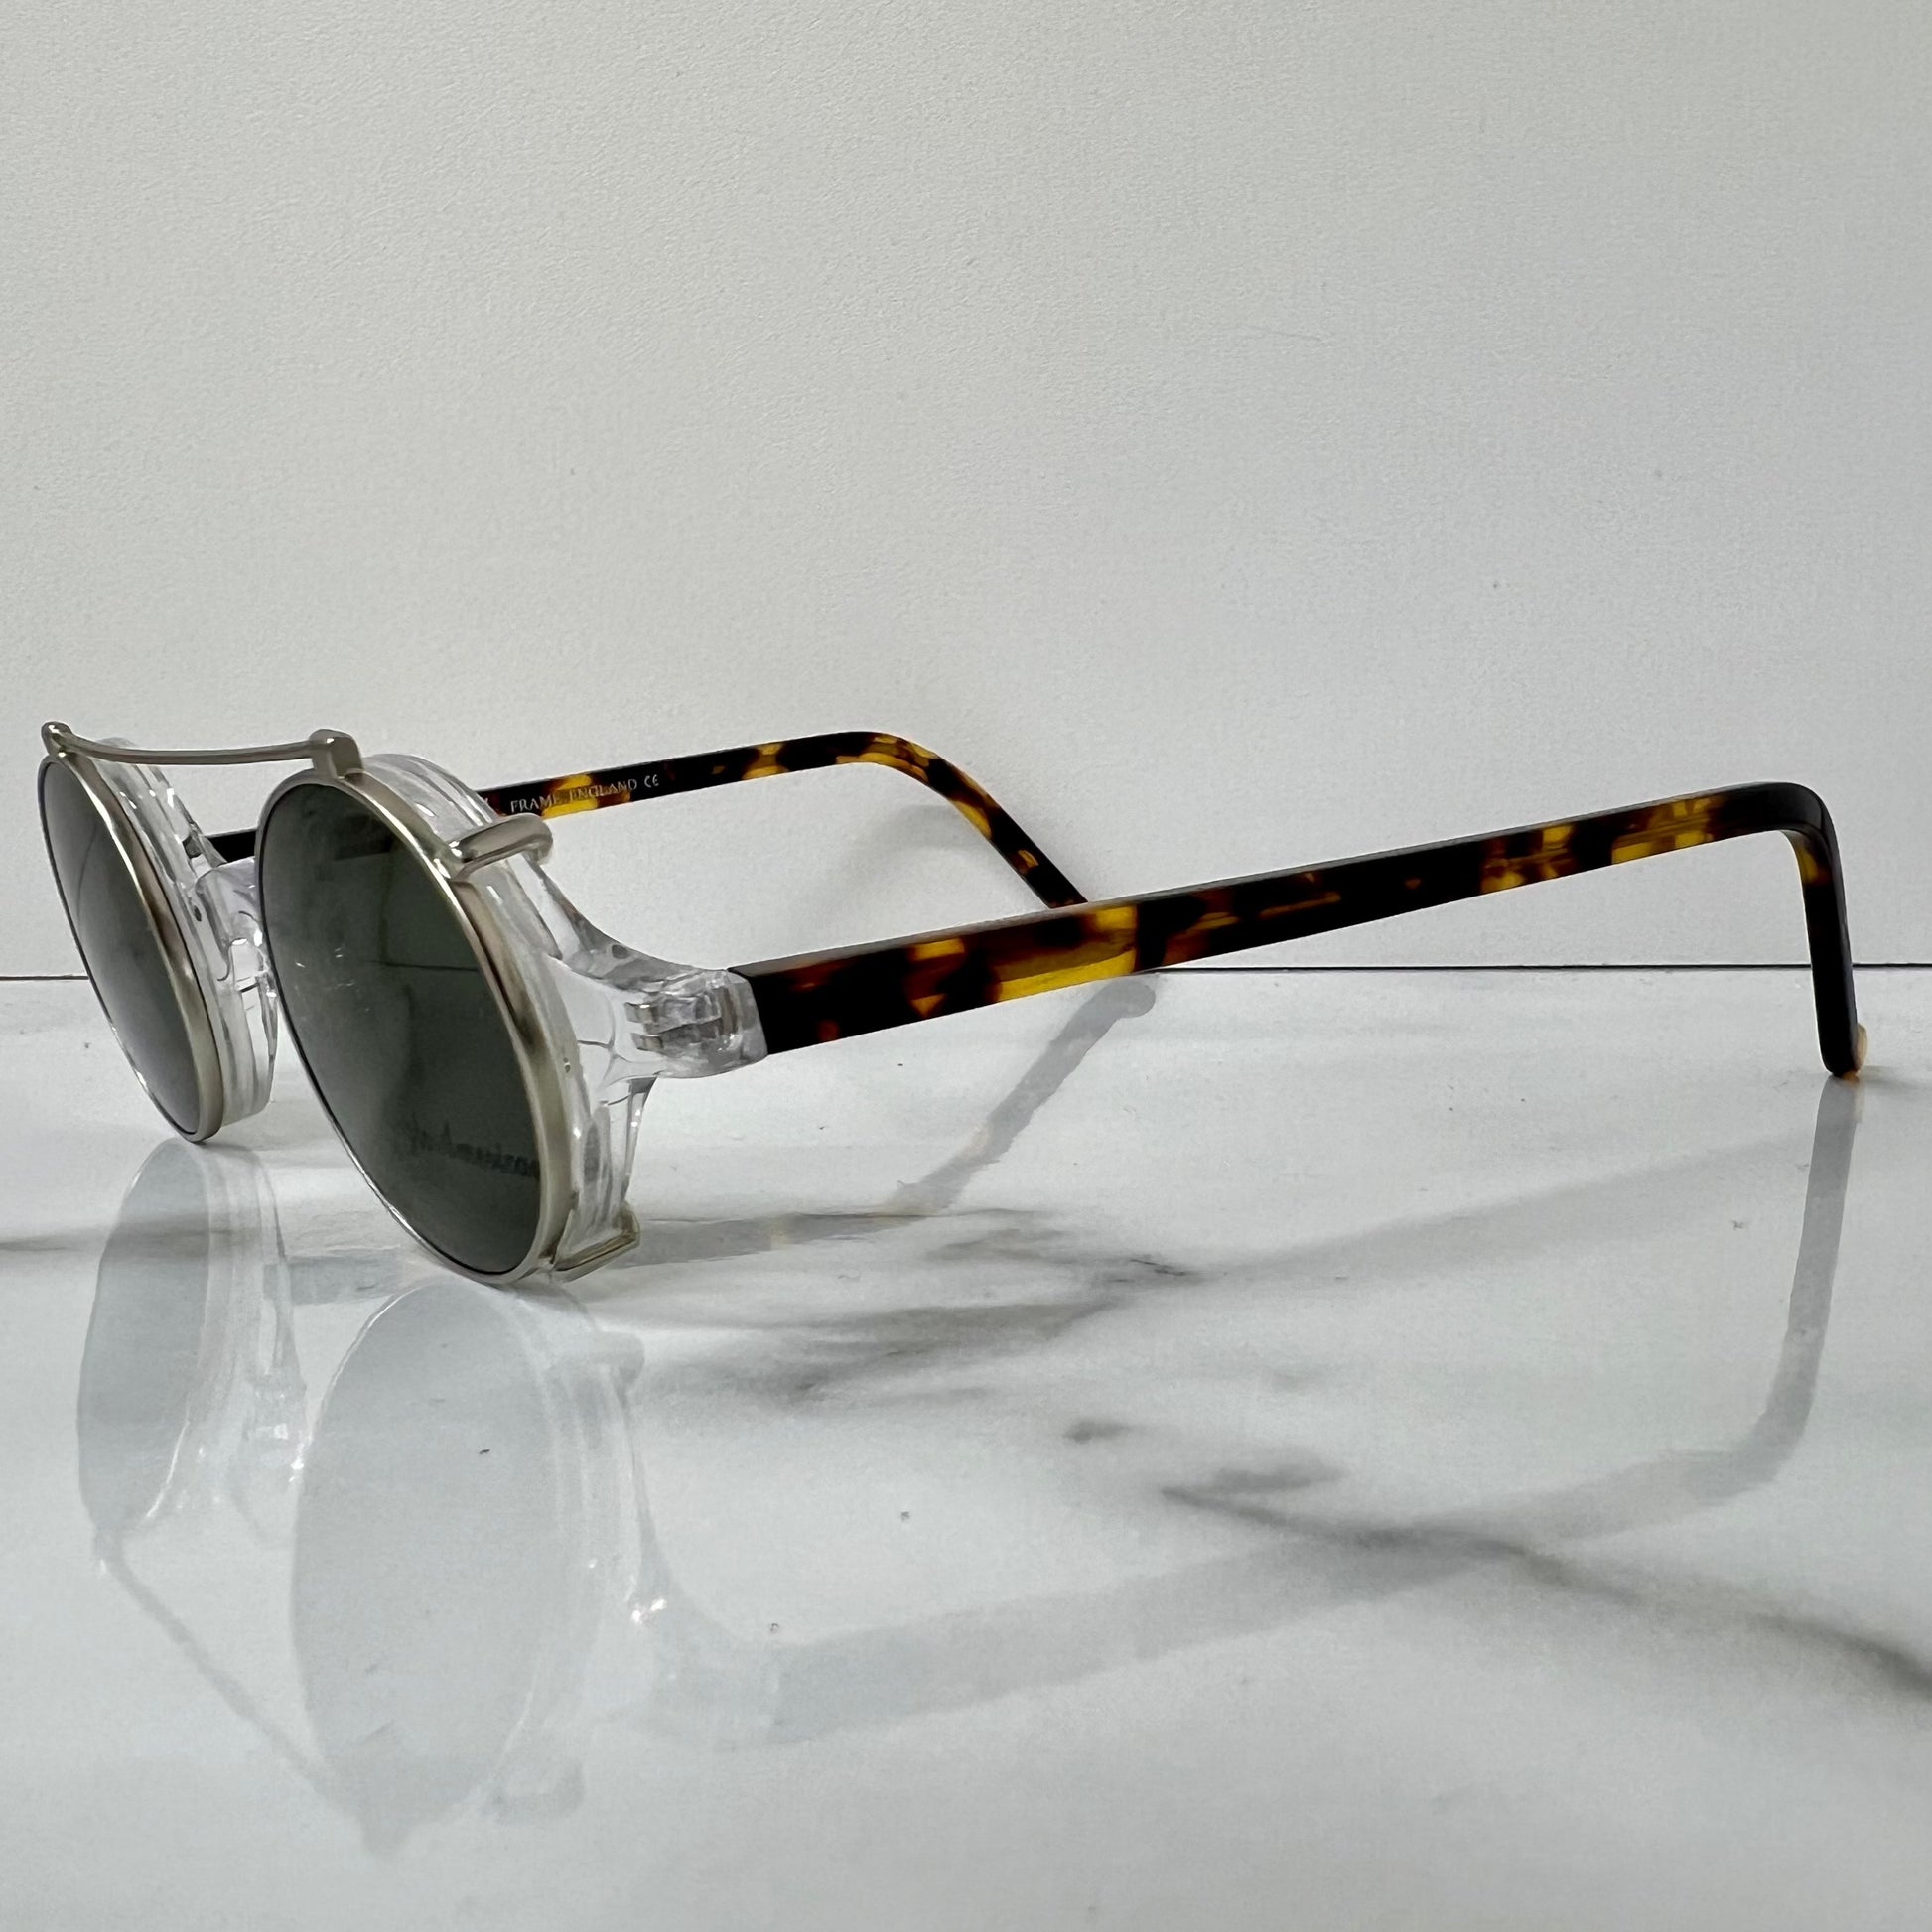 Anglo American Groucho Clip on Sunglasses CC/AH Men's Designer Classic Eyewear